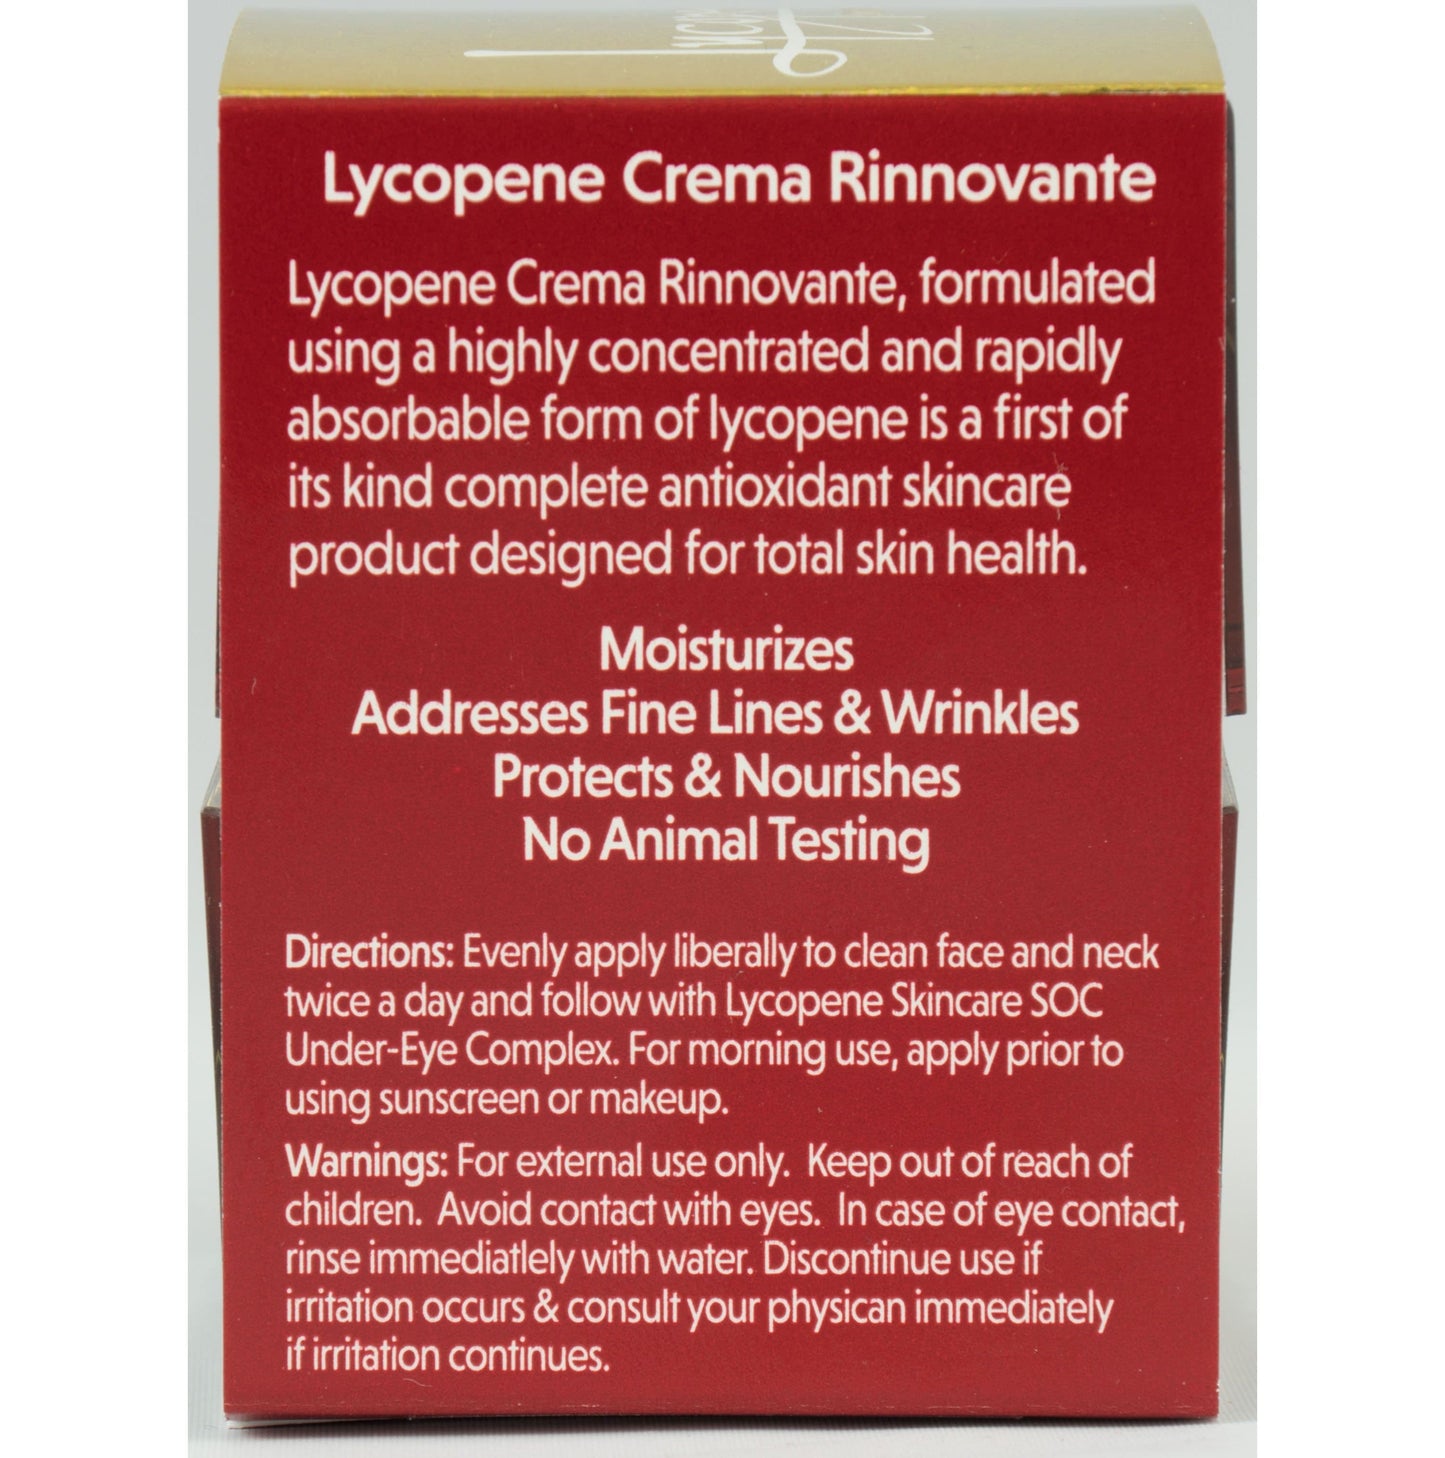 One 30 Ml Jar Lycopene Crema Rinnovante - Anti-Aging Cream, European Fashion Models Favorite with Astaxanthin, Hyaluronic Acid, with 20 Natural Organic Botanicals